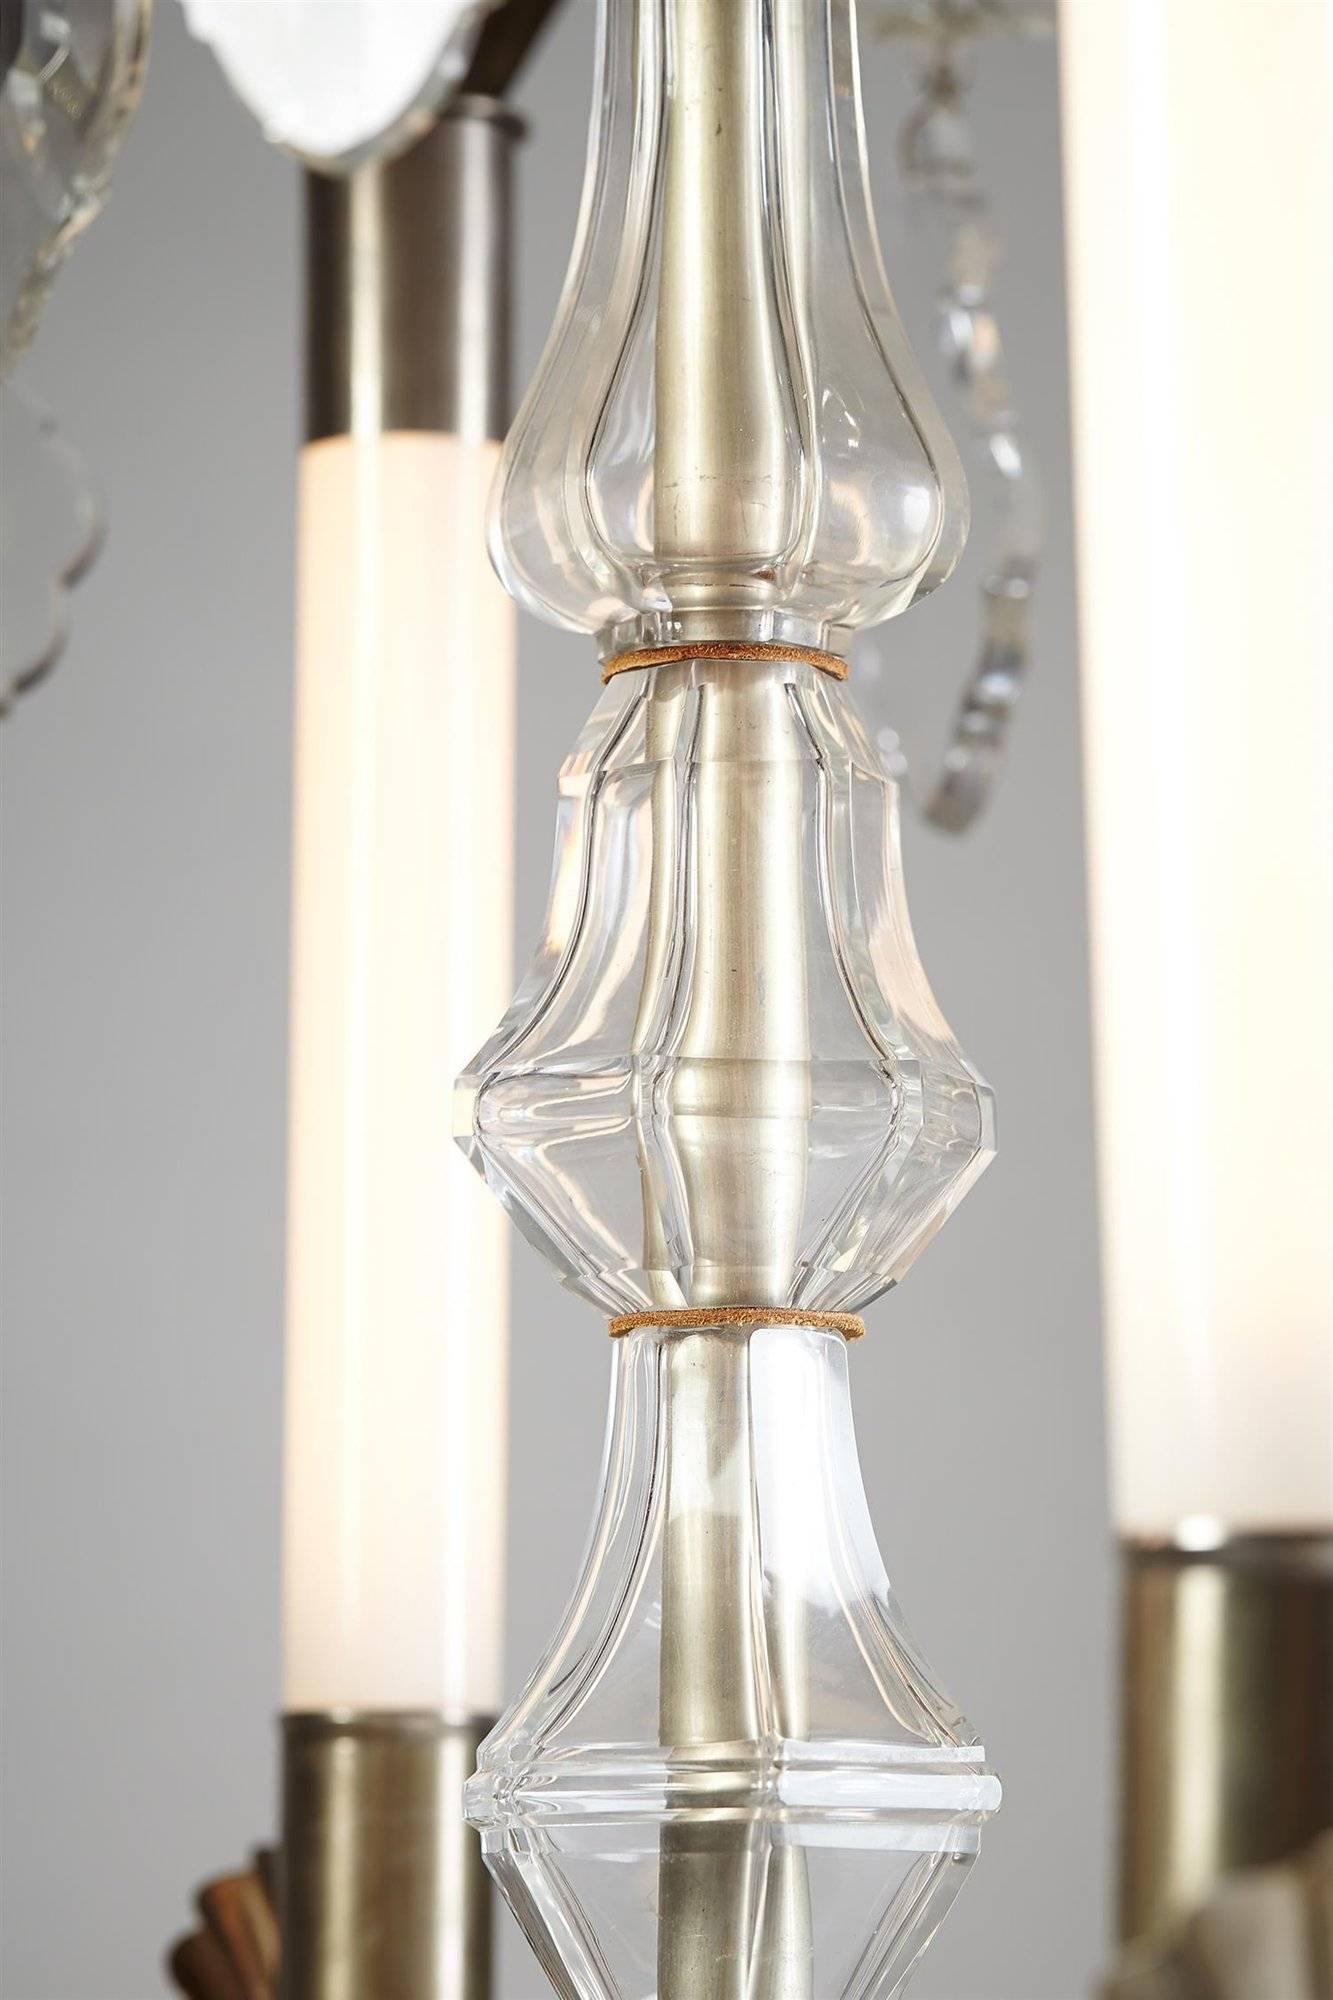 Brushed Monumental Ceiling Lamp, Designed by Otar Hökerberg, Sweden, 1930-1931